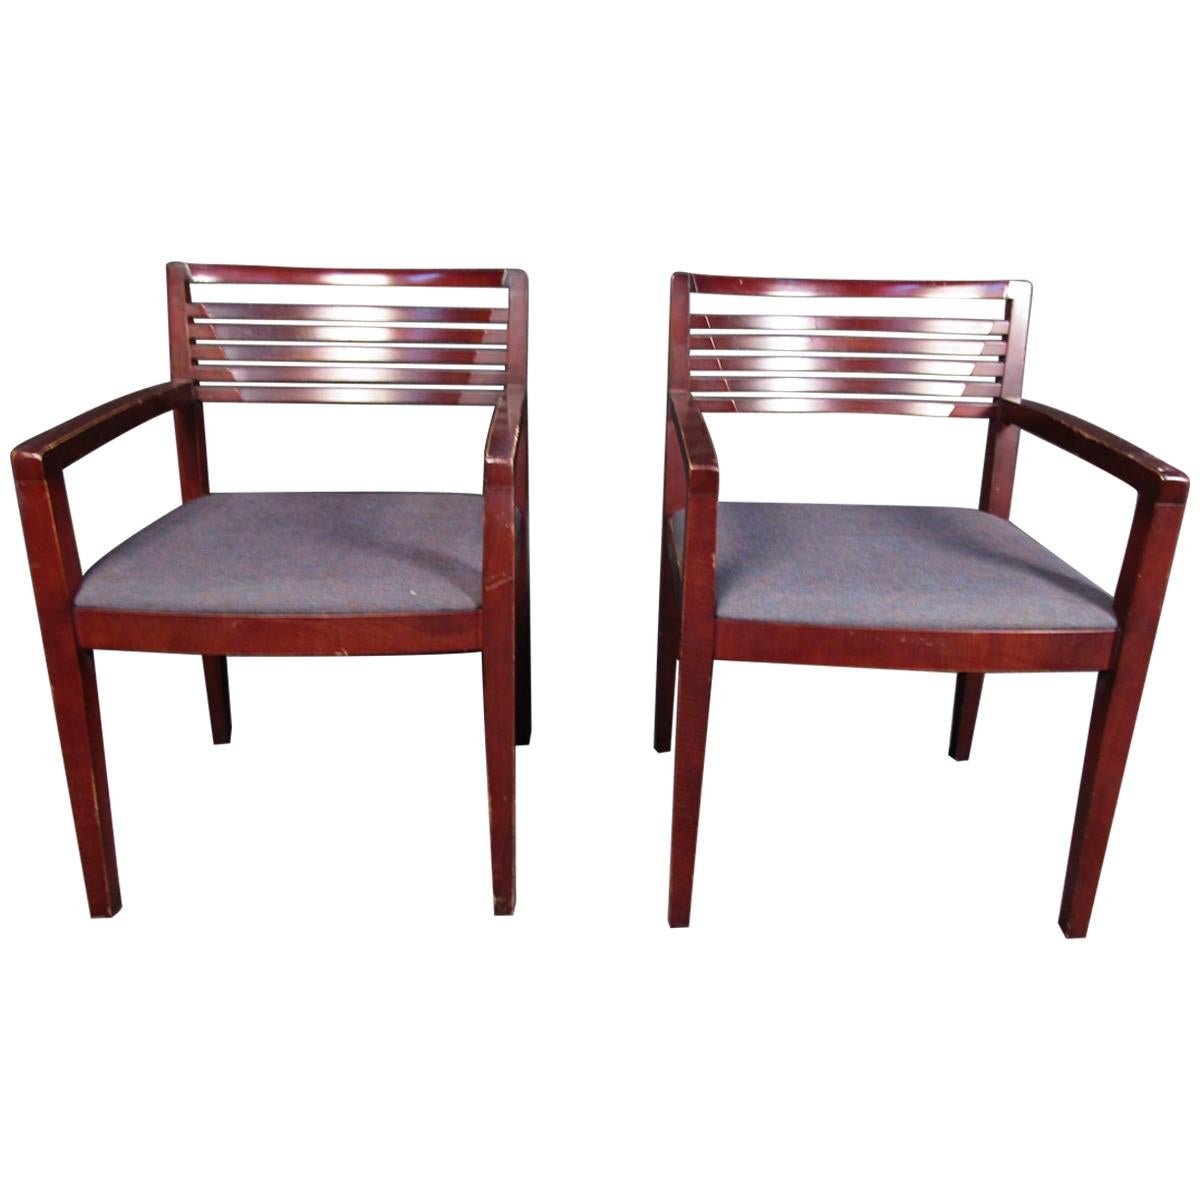 Pair of Vintage Modern Chairs